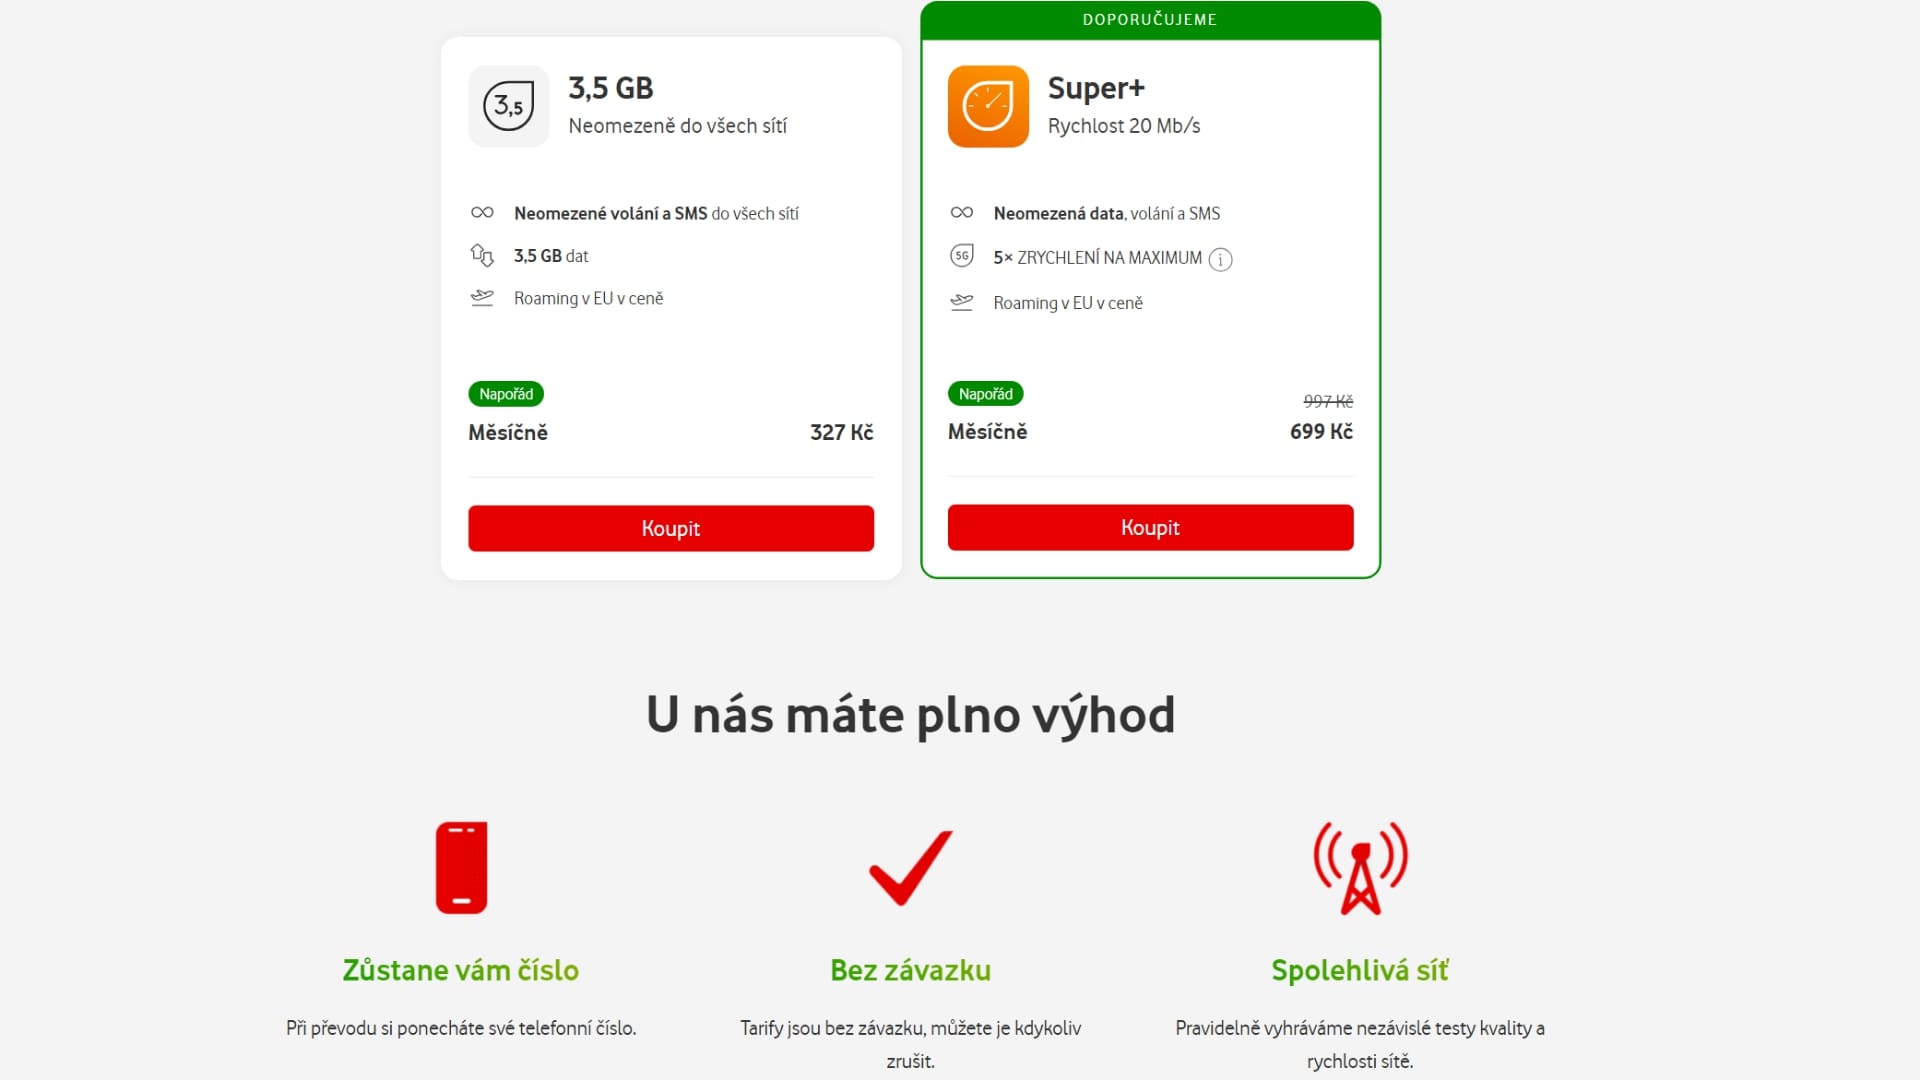 Vodafone tarif Super+